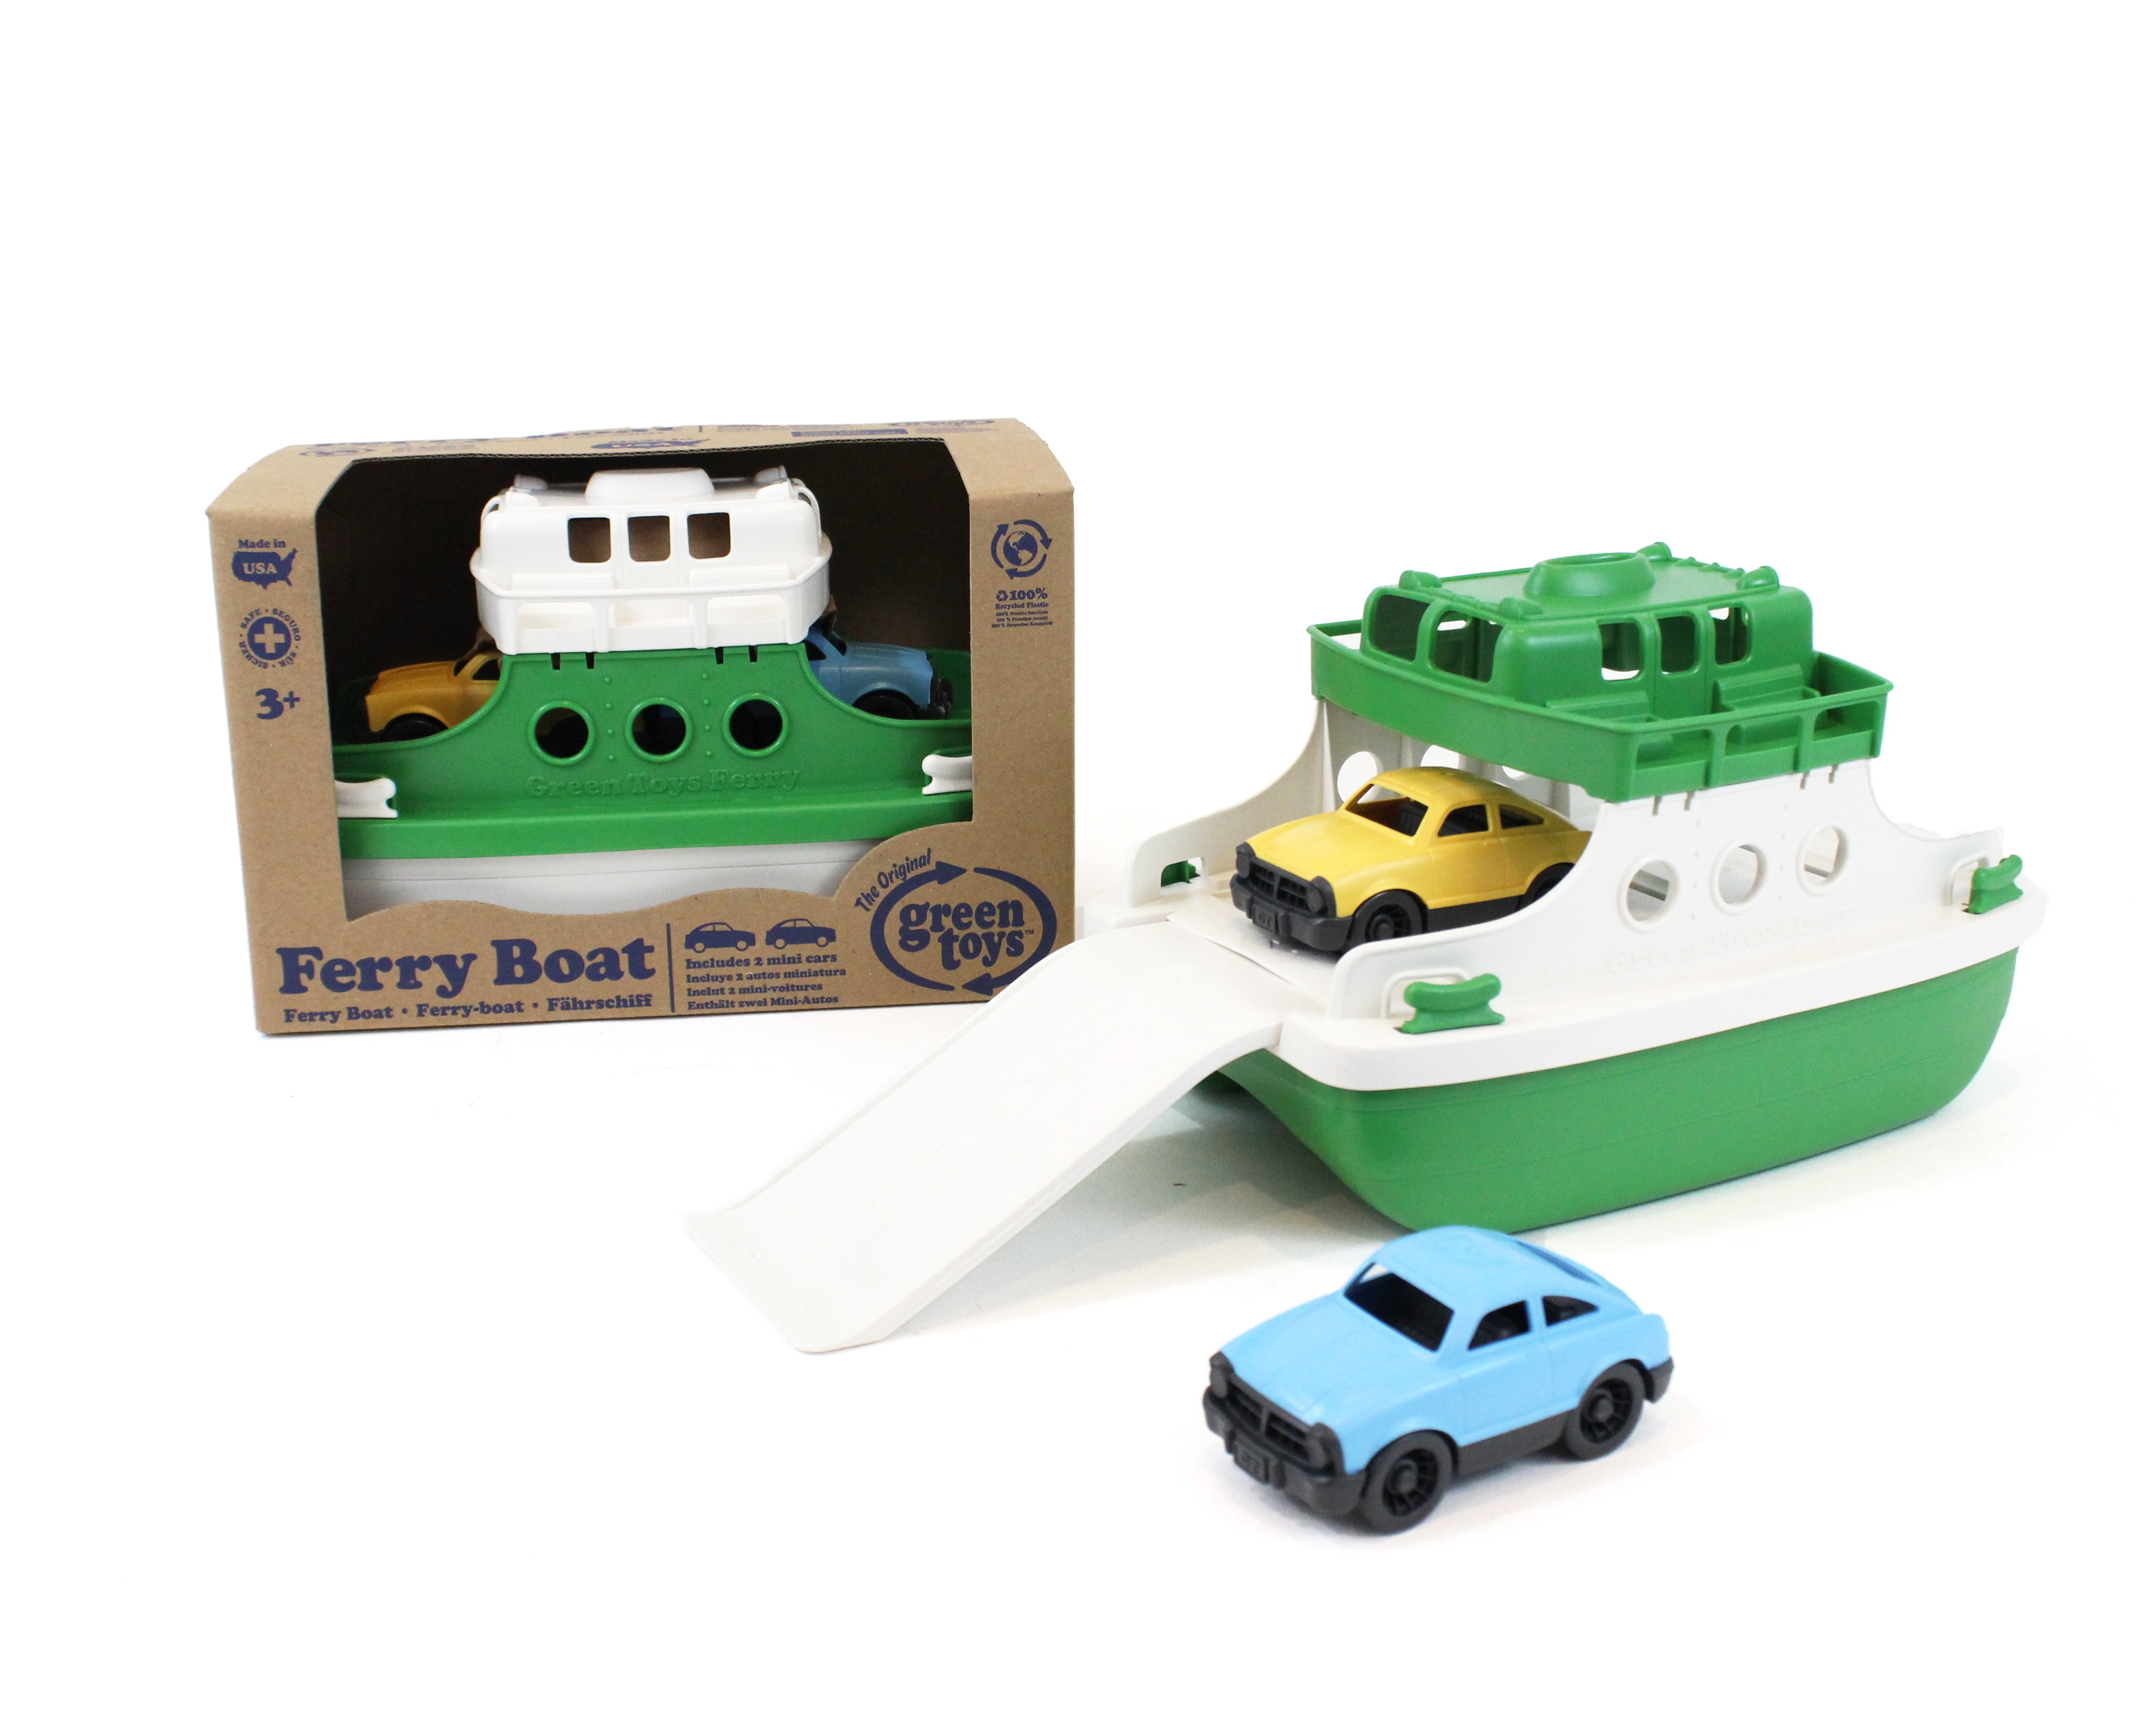 Baoli - Baby Educational Boat Toy - Green